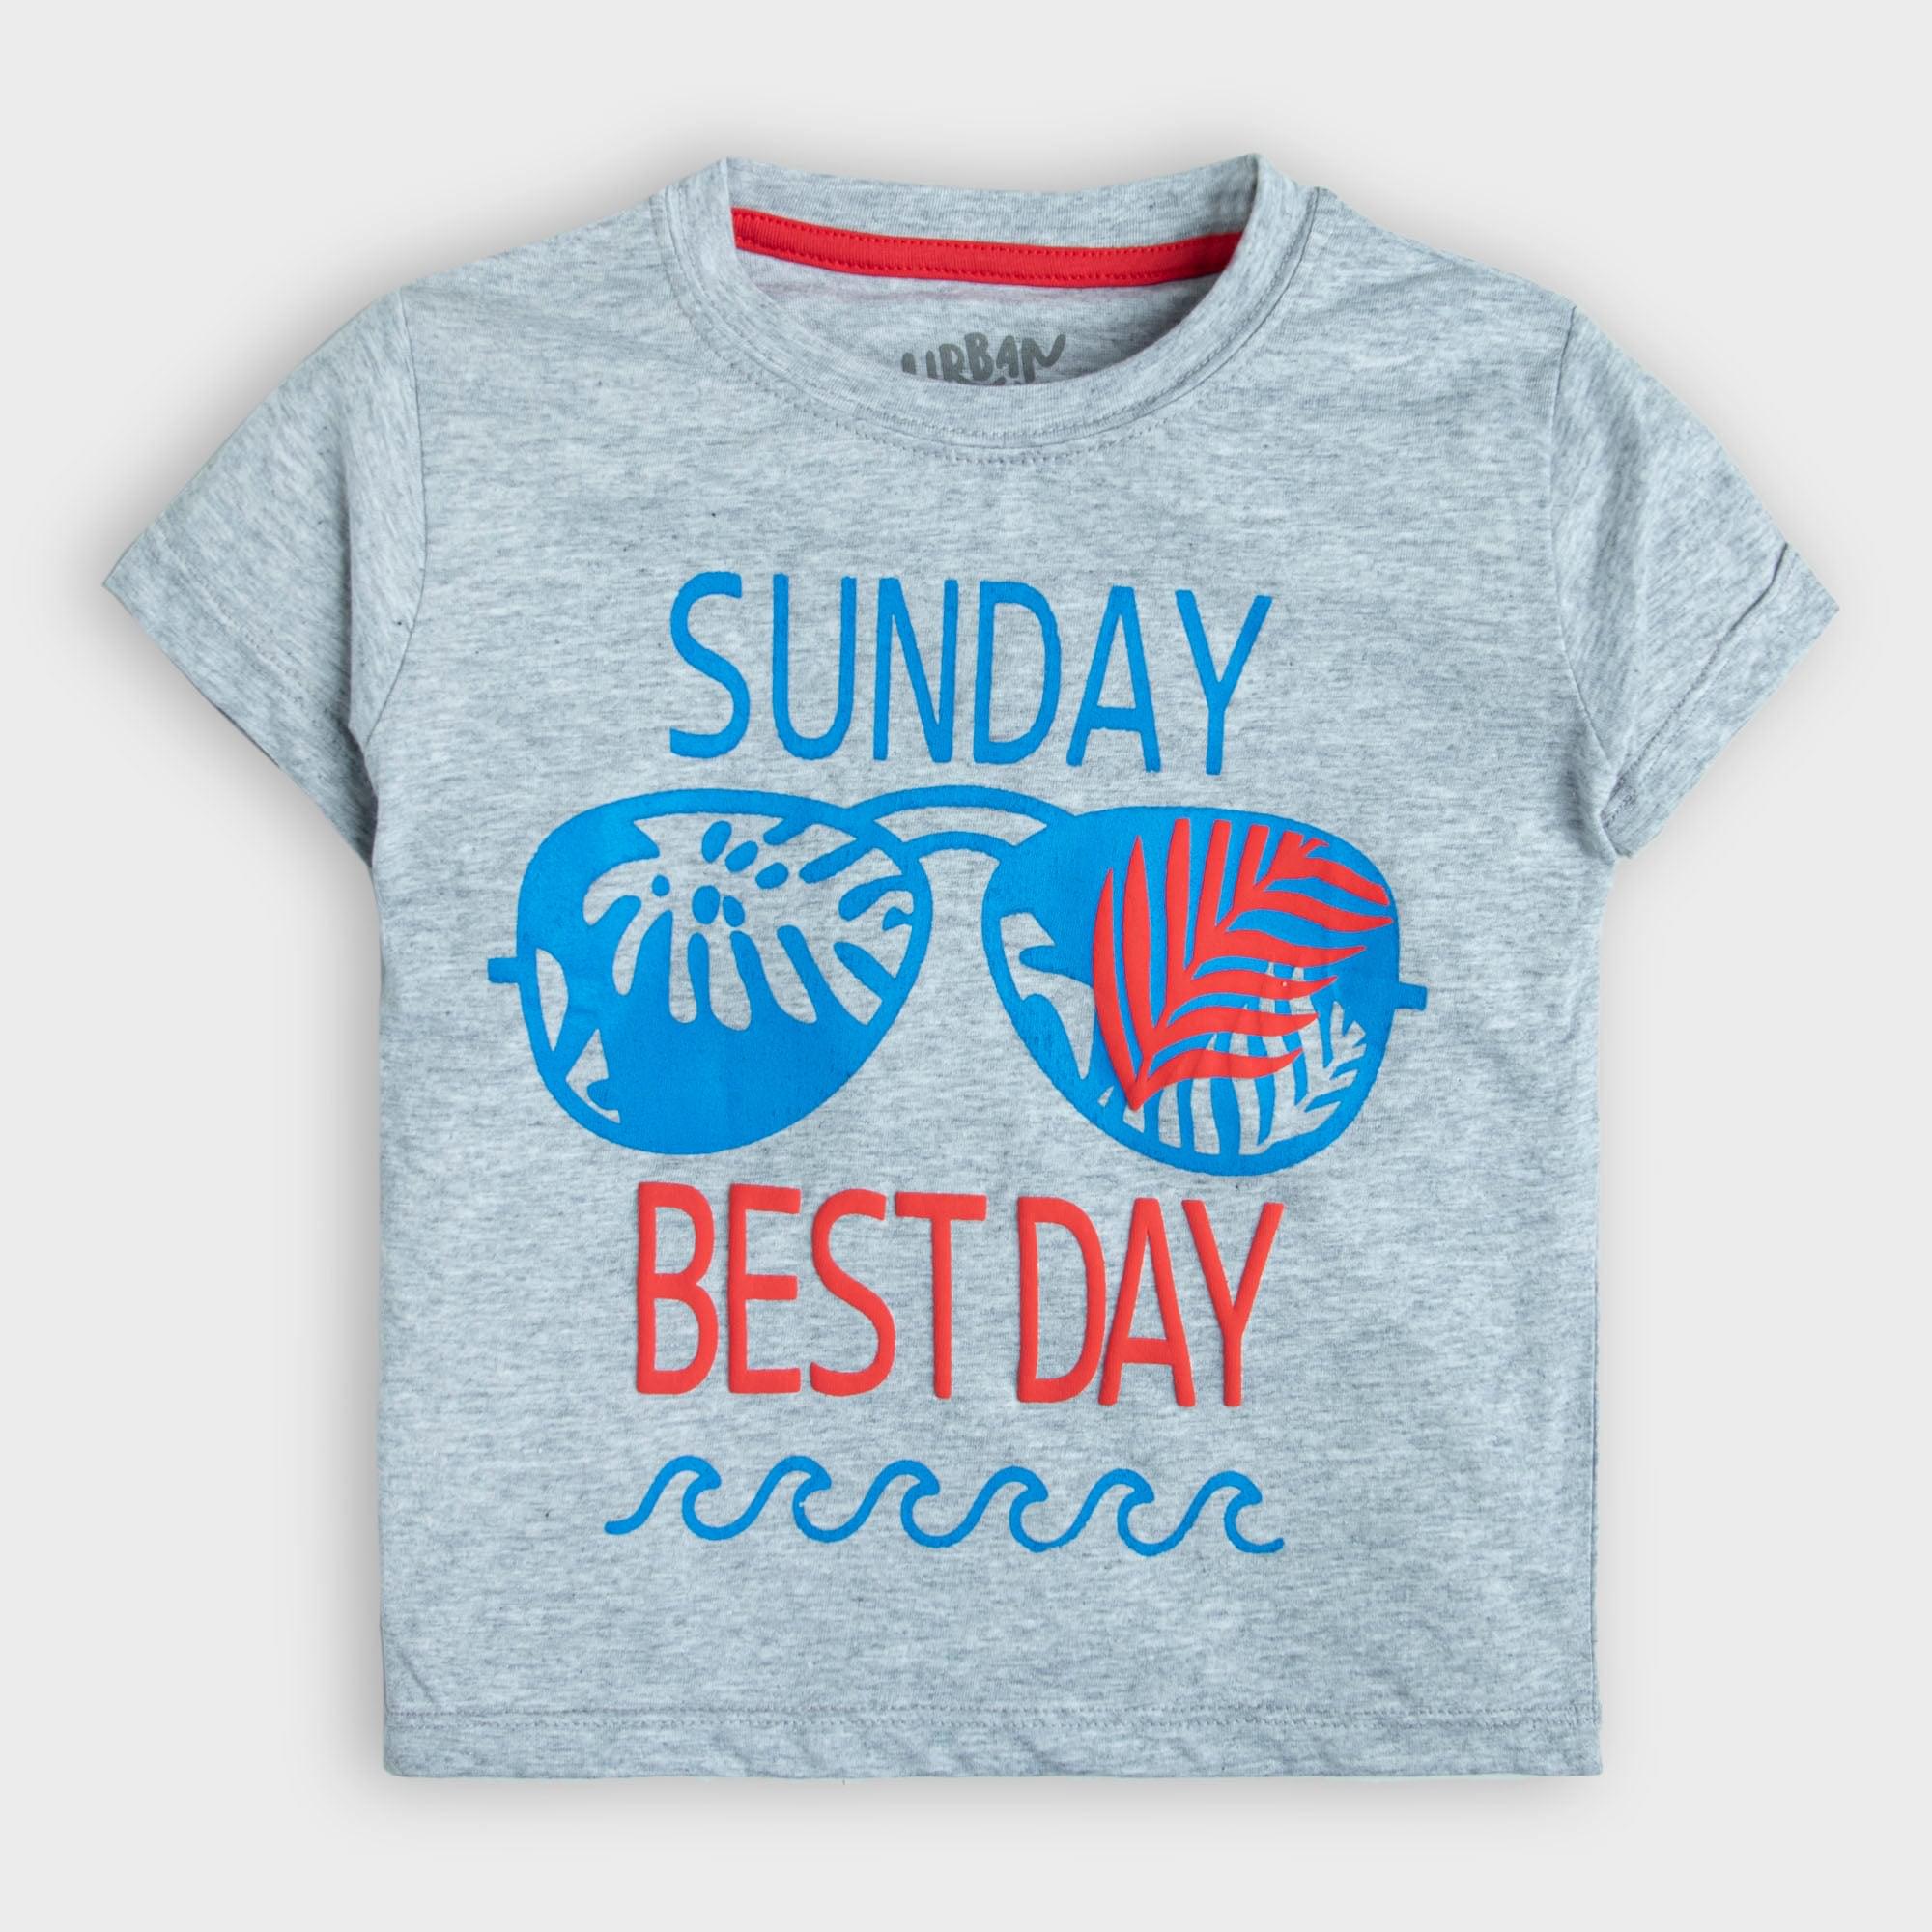 Best Day T-Shirt